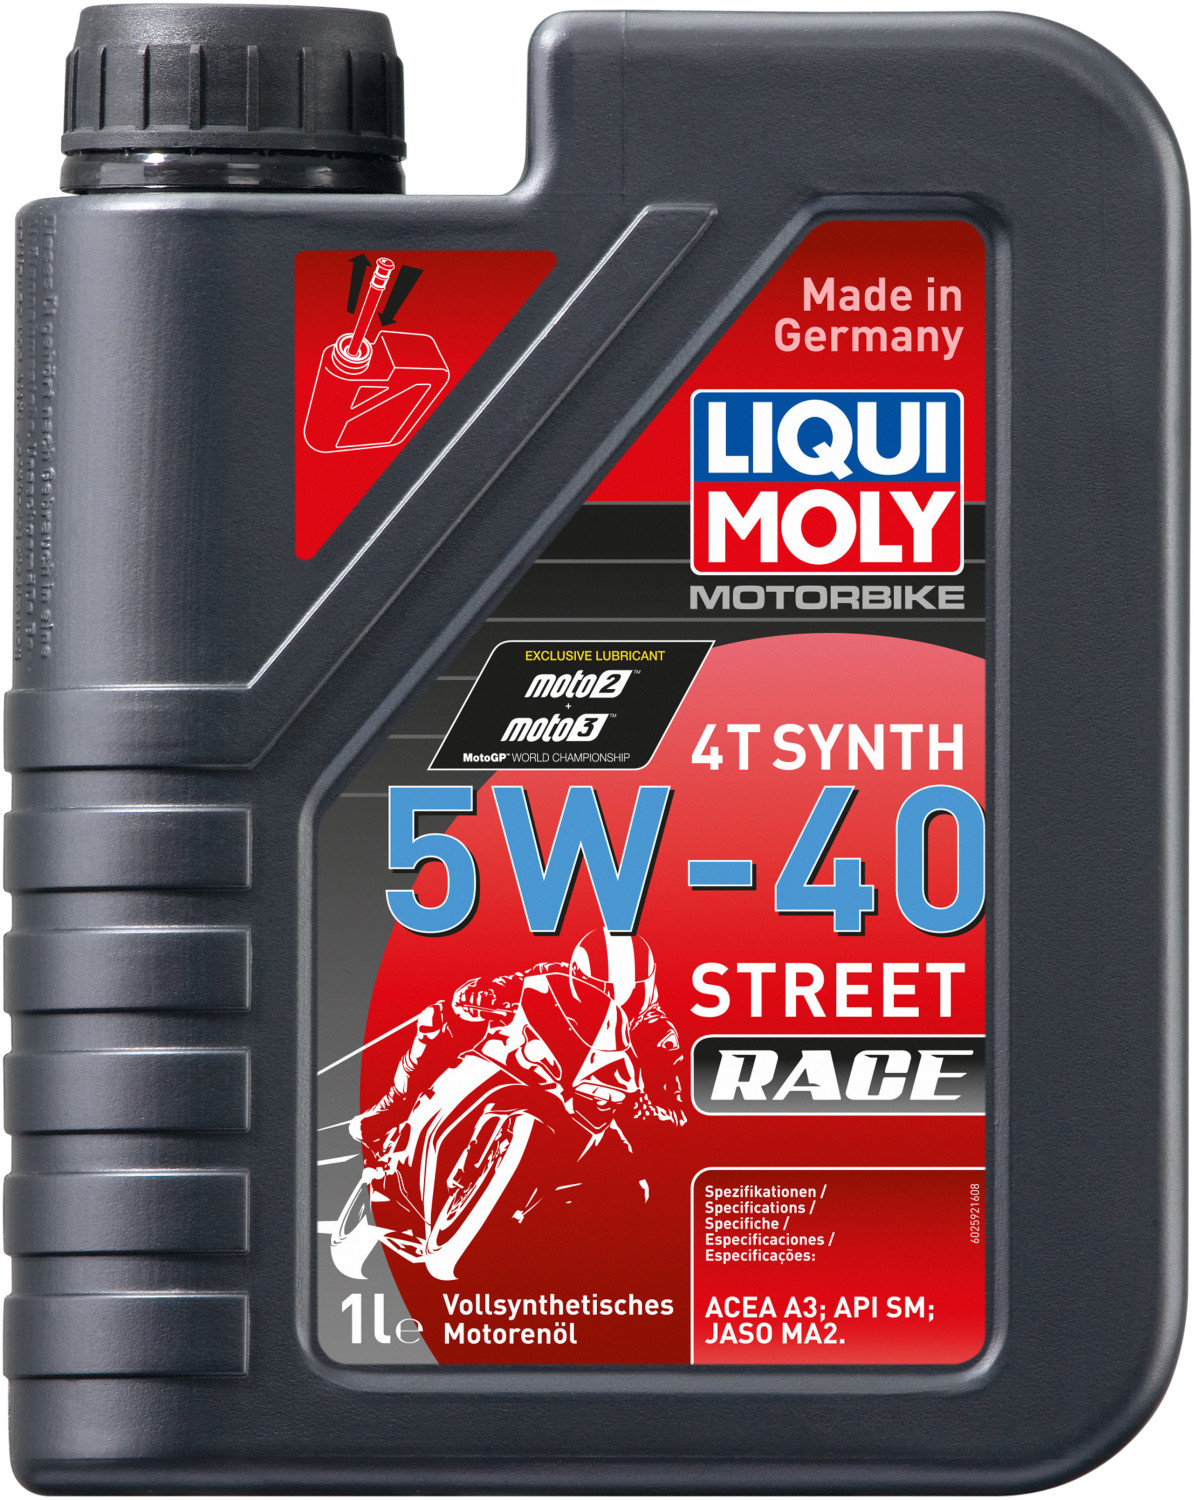 LIQUI MOLY Motorbike 4T Synth 5W-40 Street Race (1 l)